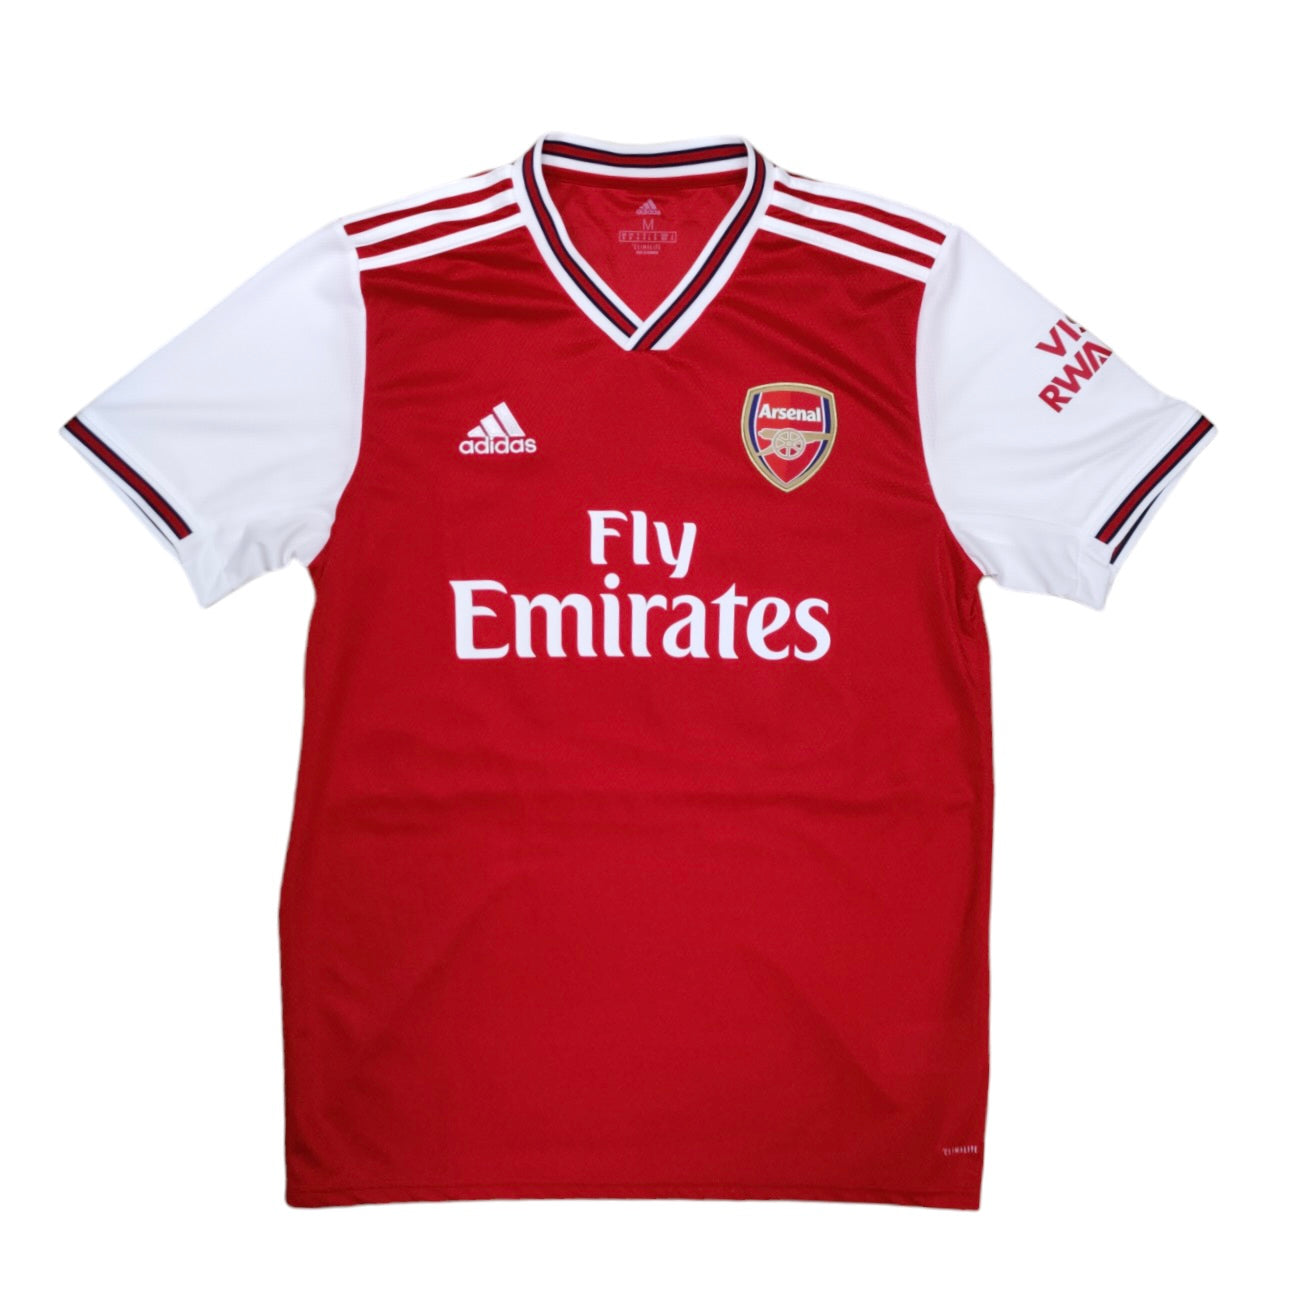 Adidas Arsenal Guendouzi 2019/2020 Home Football Jersey